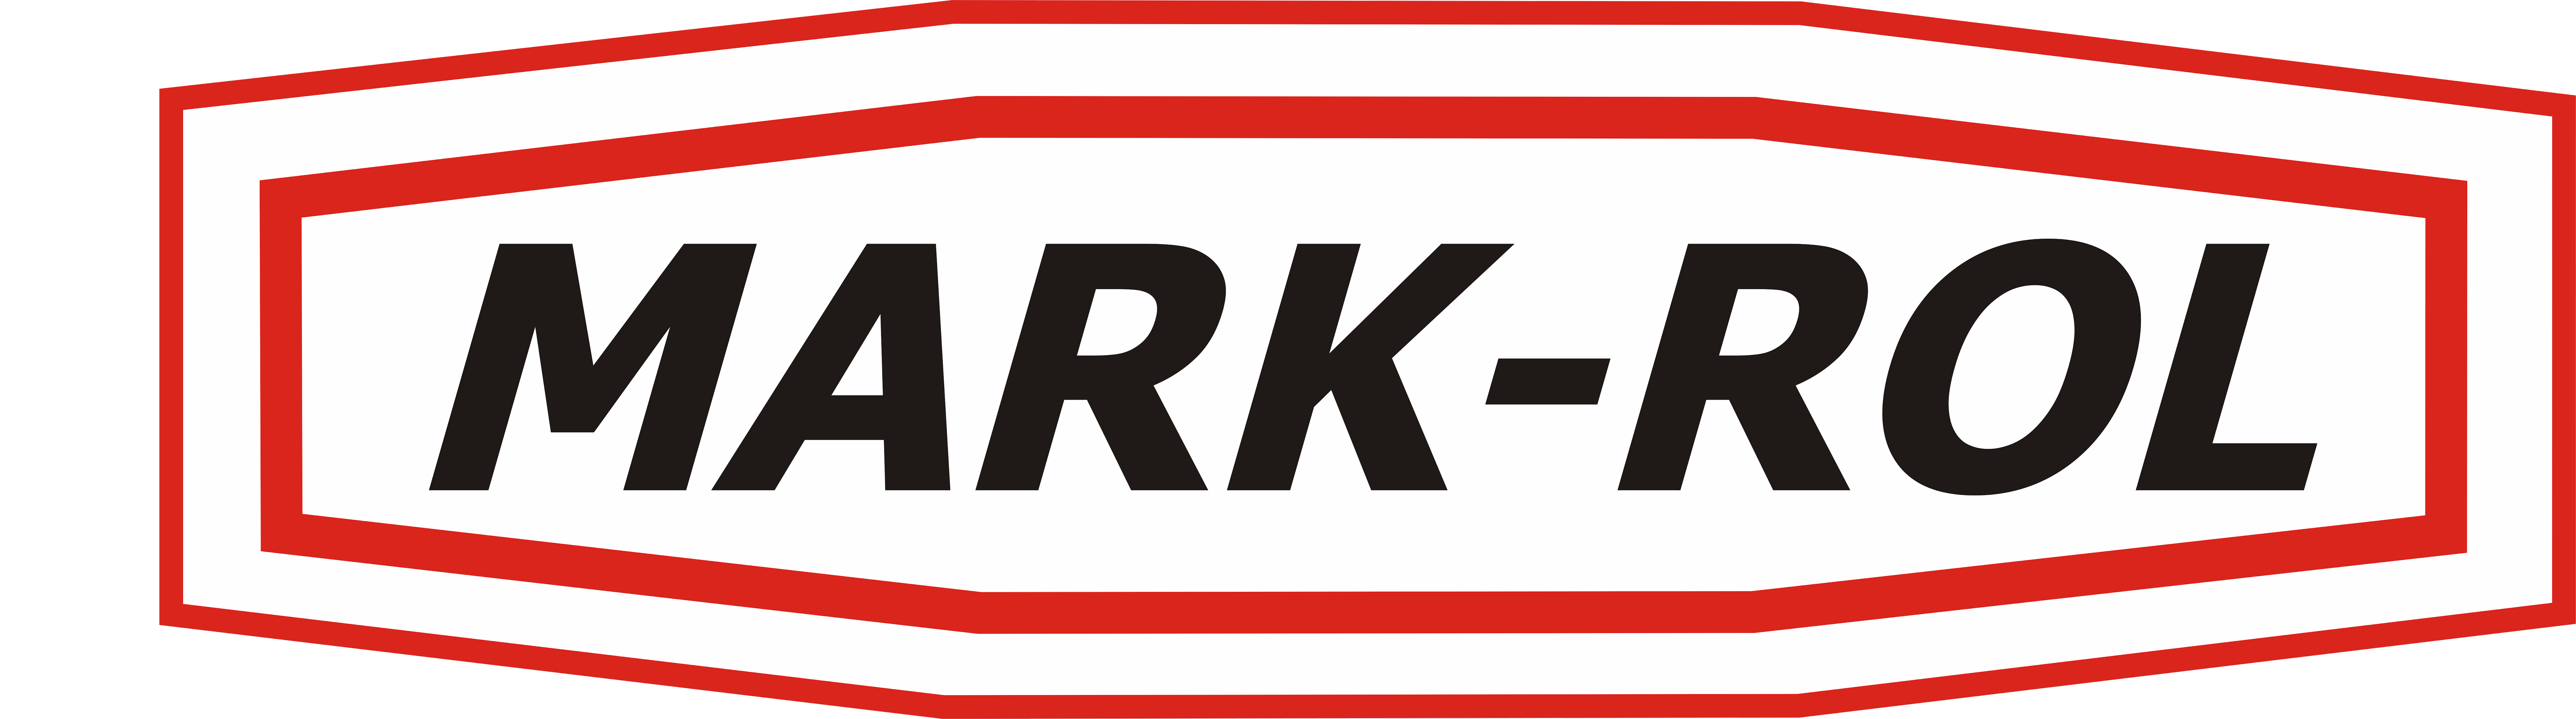 MARK-ROL Marek Piniarski sp. j.